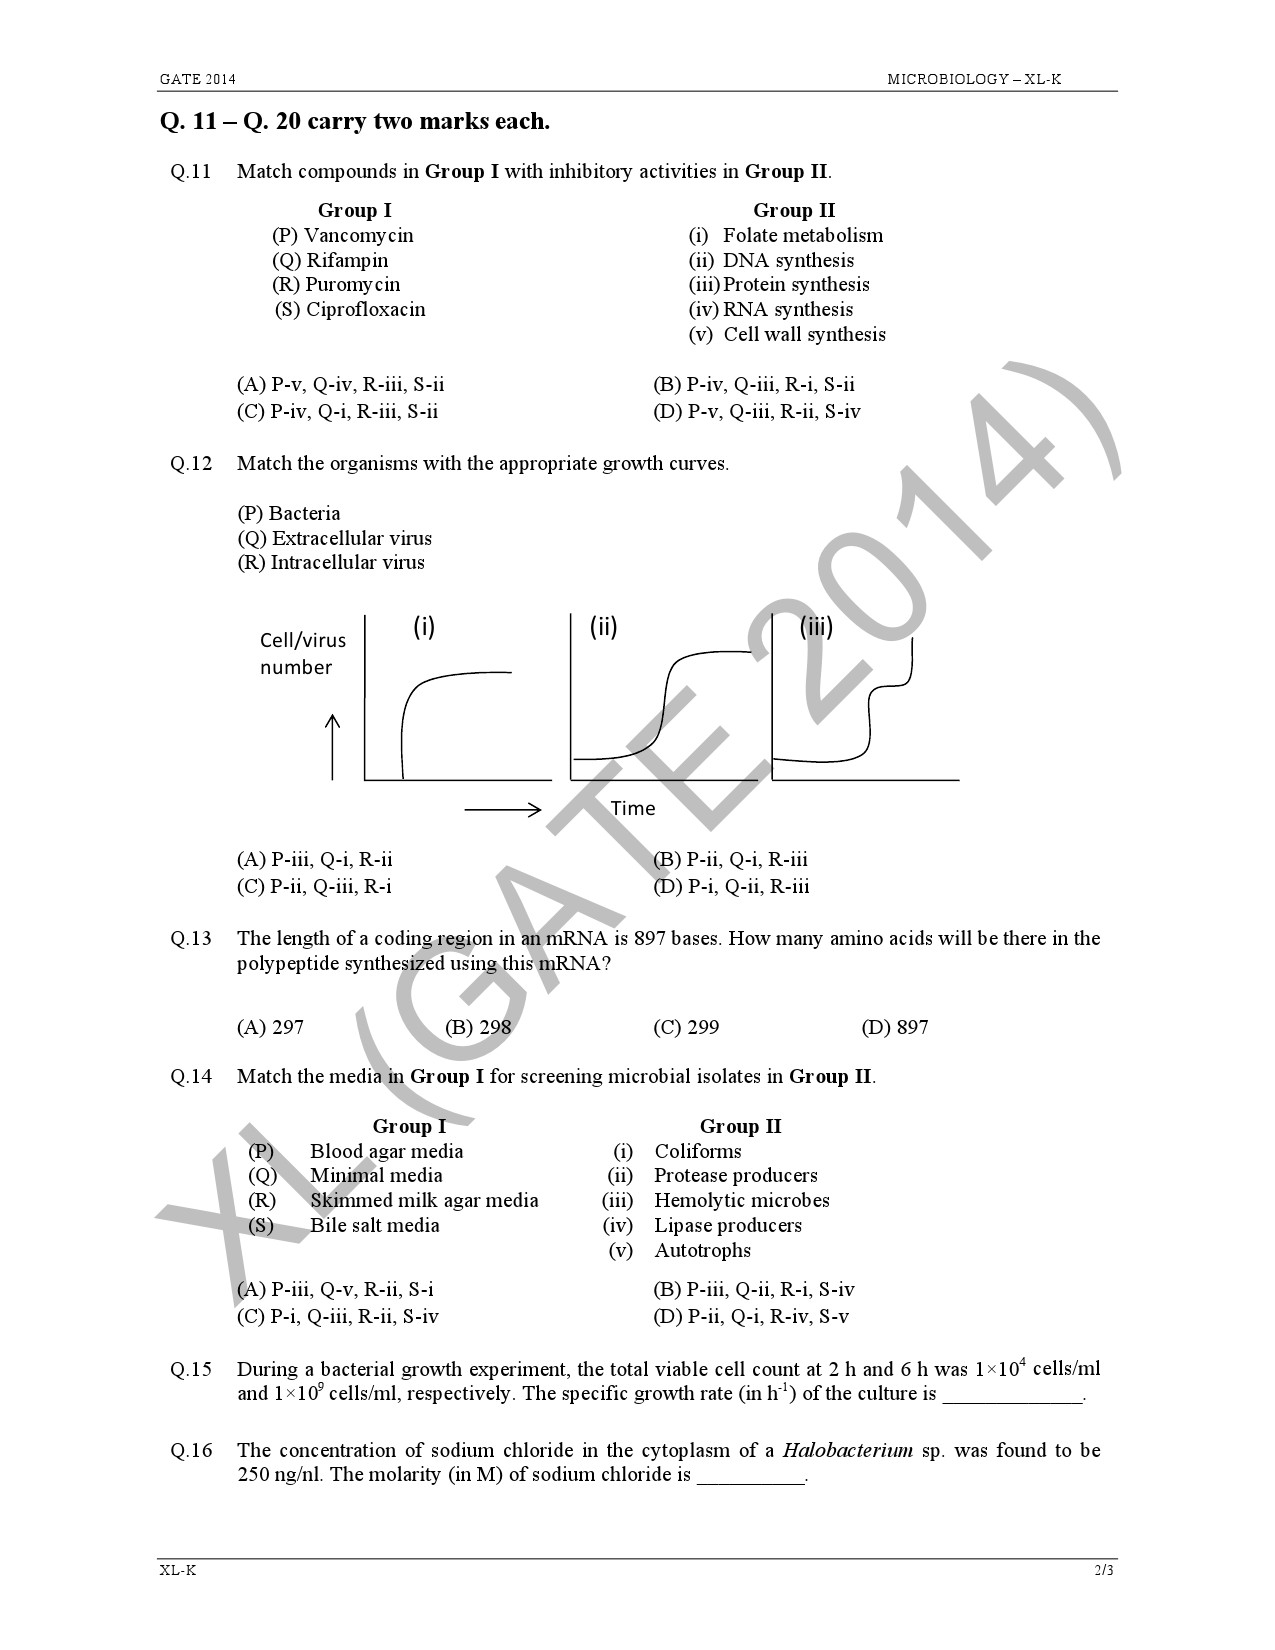 GATE Exam Question Paper 2014 Life Sciences 23